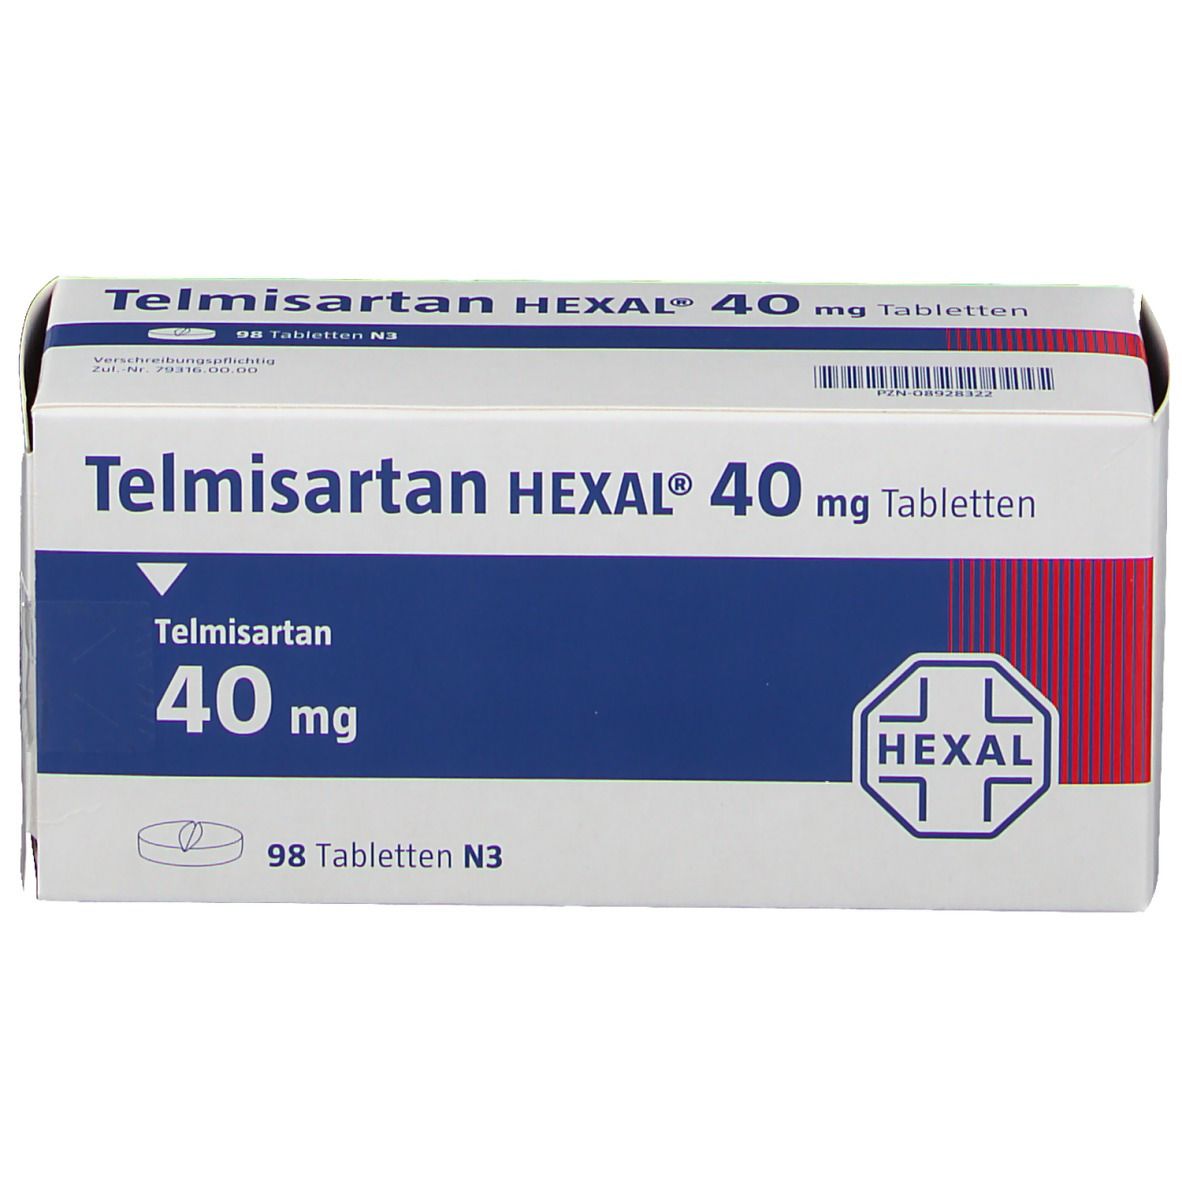 Telmisartan HEXAL® 40 mg